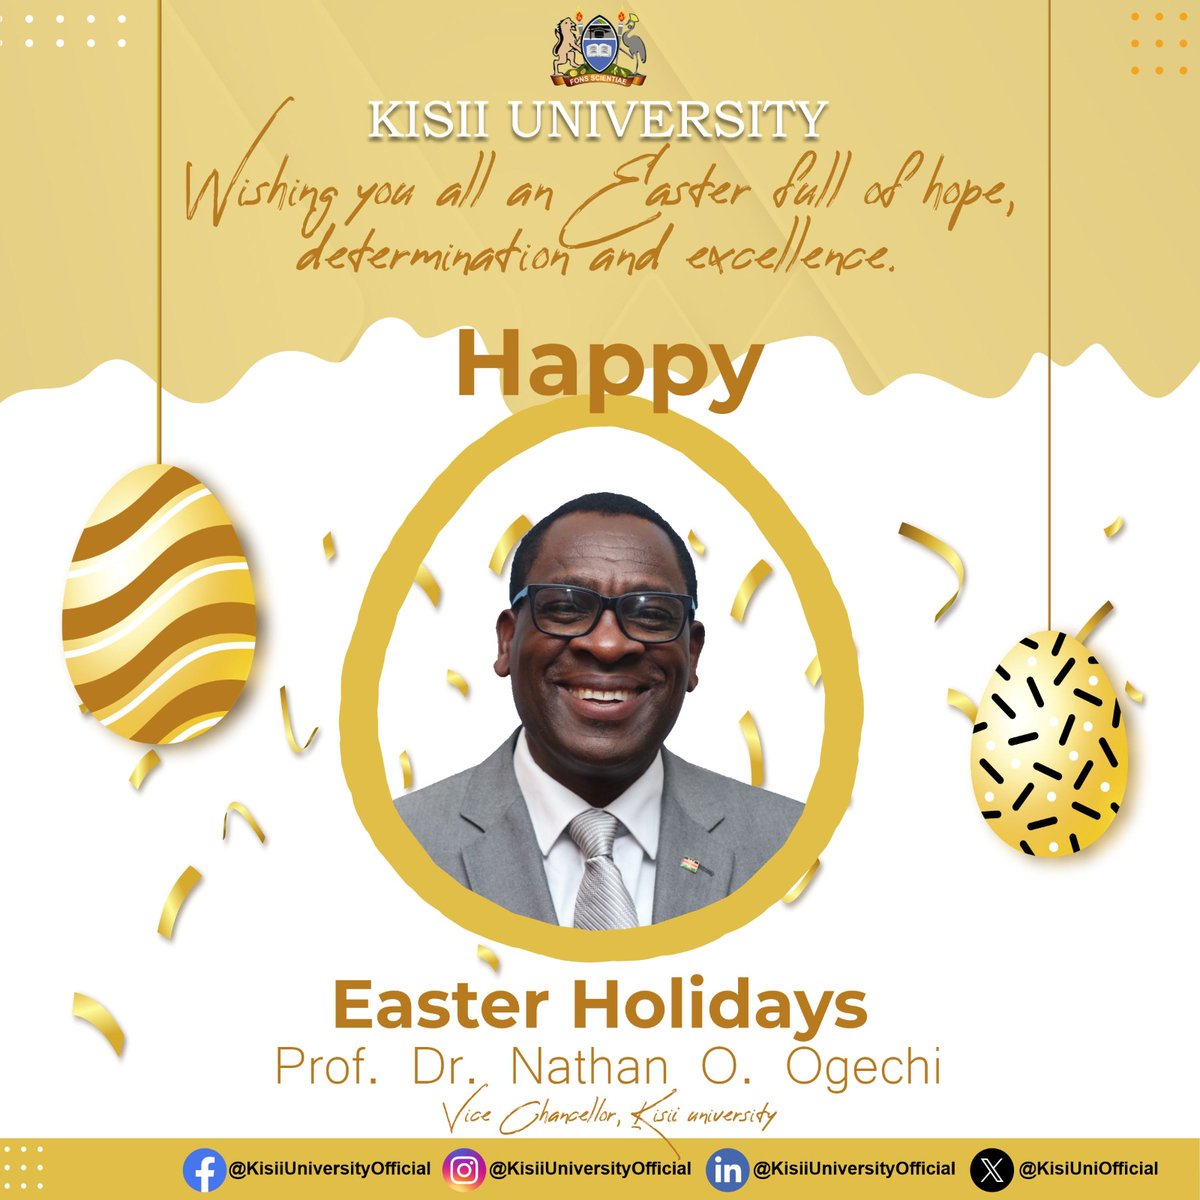 Wishing you a wonderful Easter. #KisiiUniversity